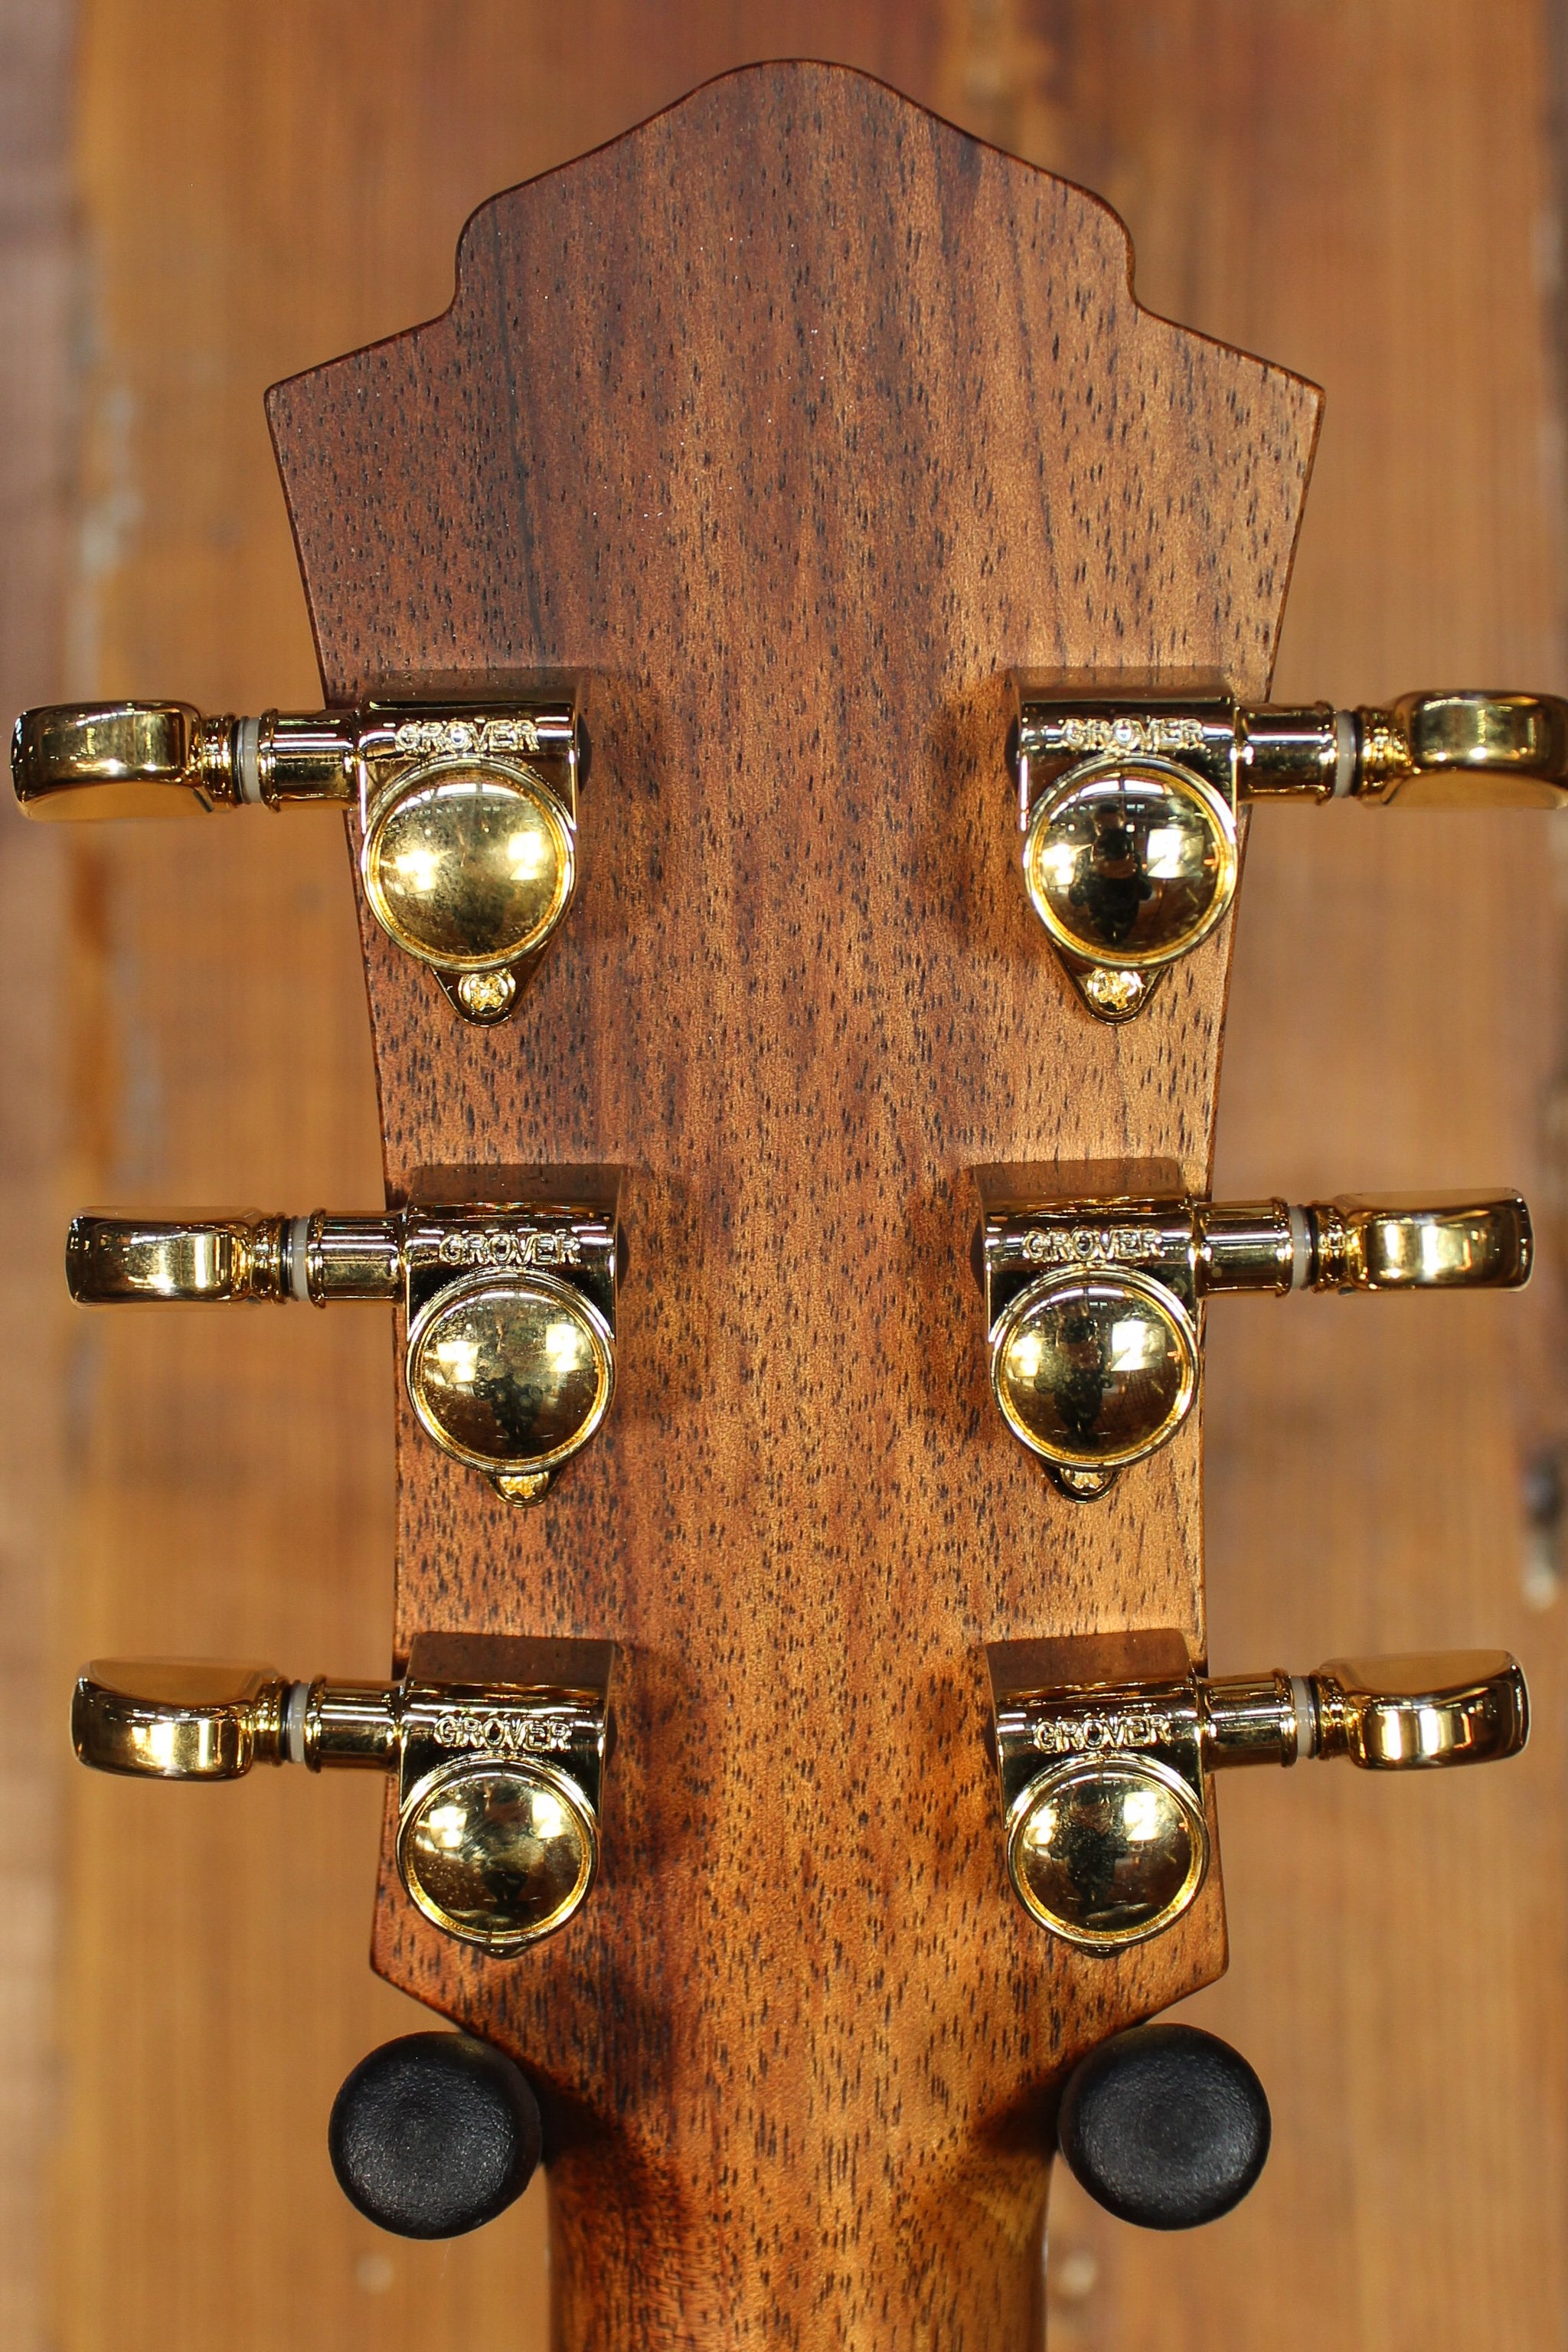 Maton Vera May Special w/ Lutz Spruce & Blackwood ID-13779 - Artisan Guitars